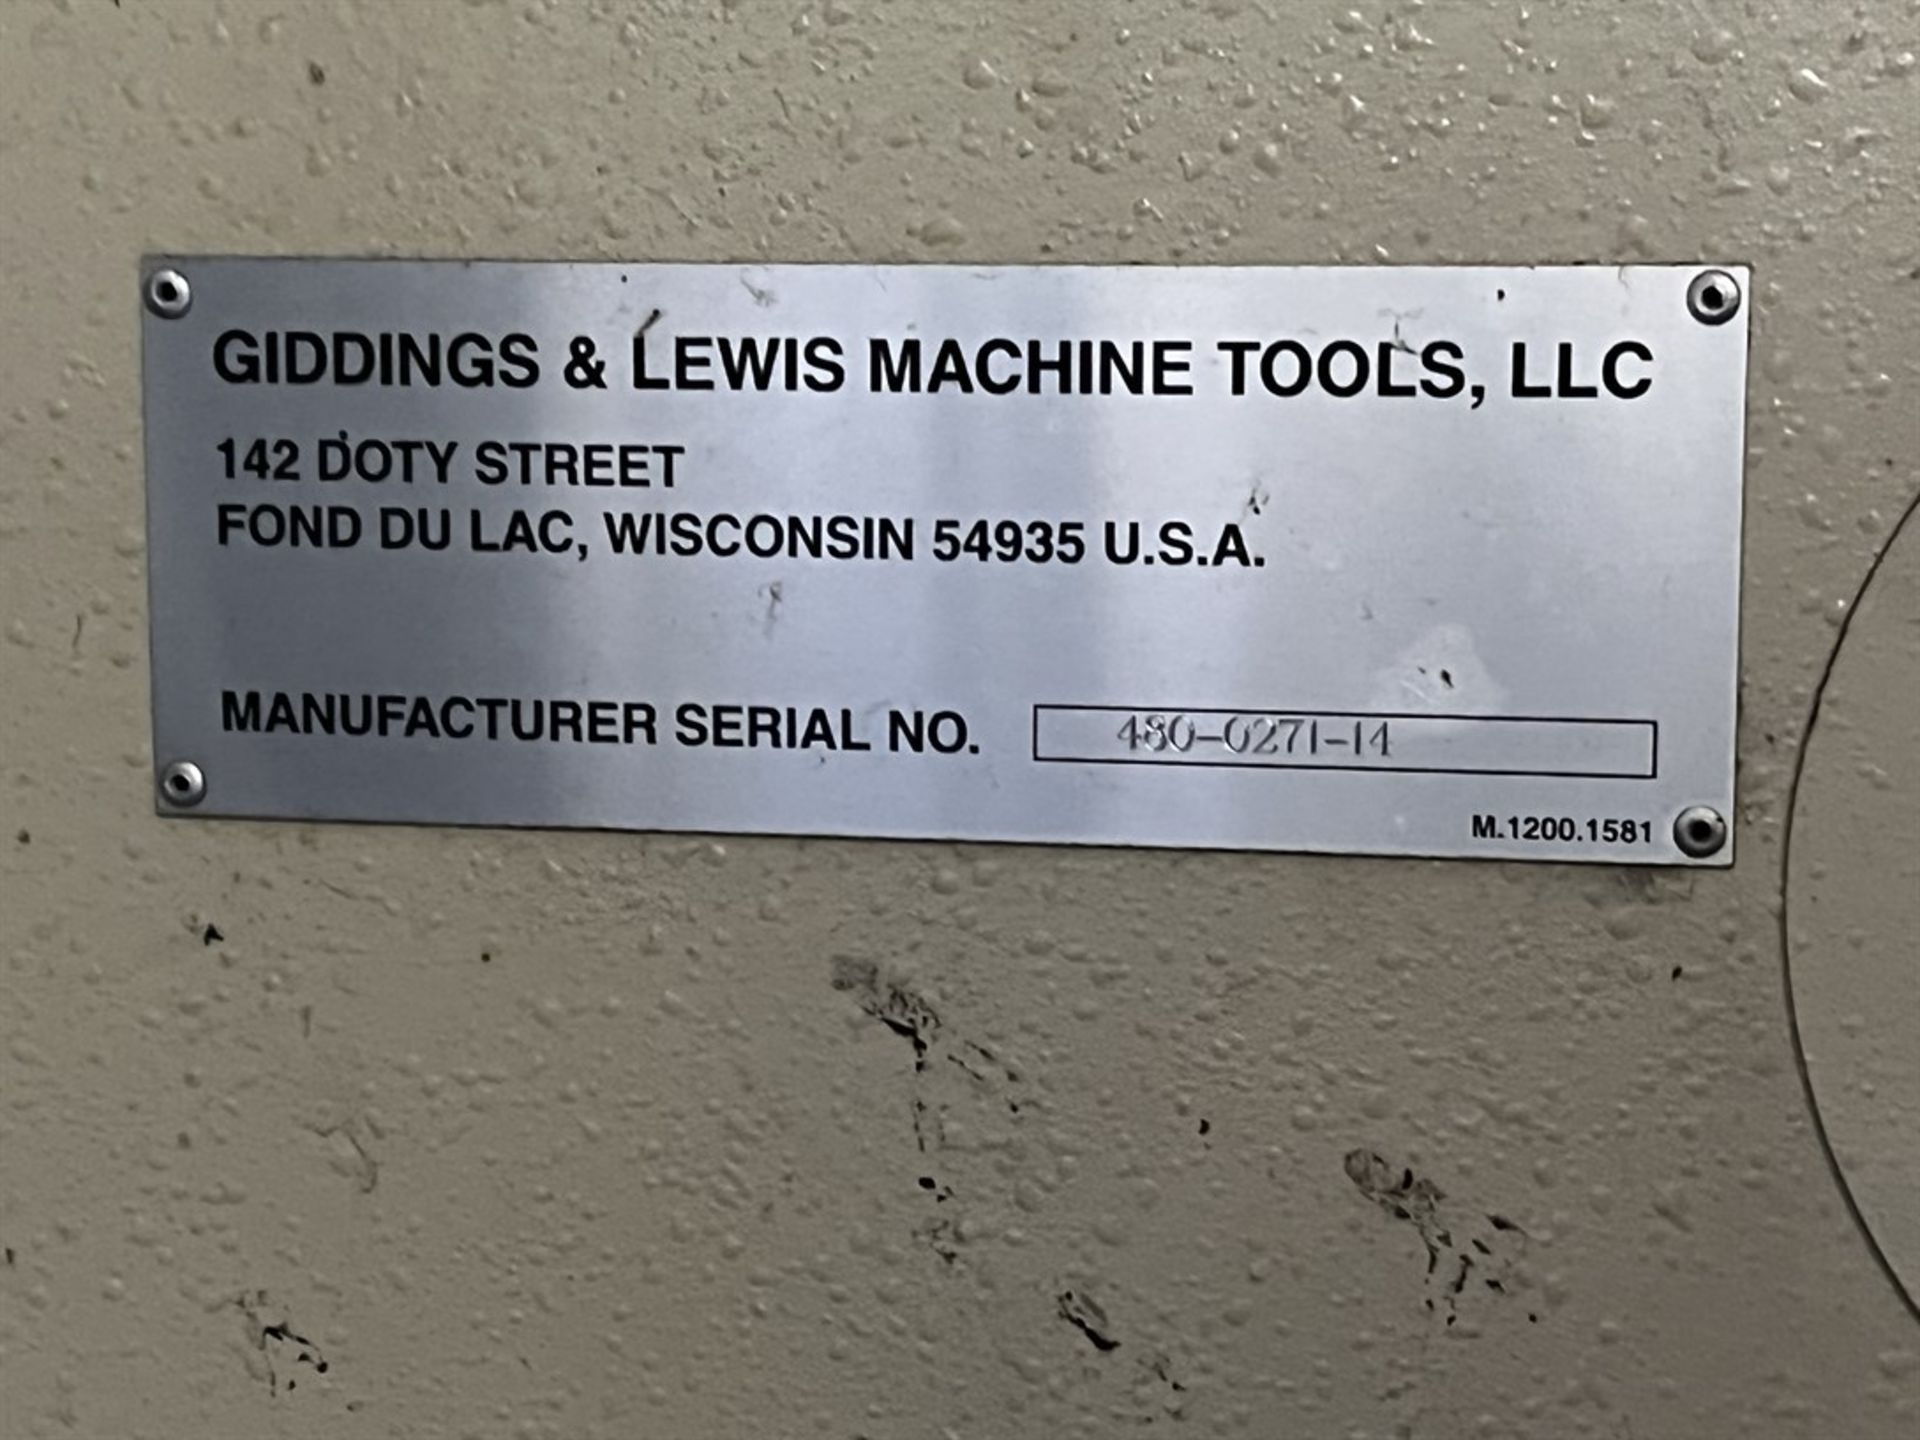 2014 GIDDINGS & LEWIS MC1600 Horizontal Machining Center, s/n 480-0271-14, Fanuc 31i-B Control - Image 17 of 17